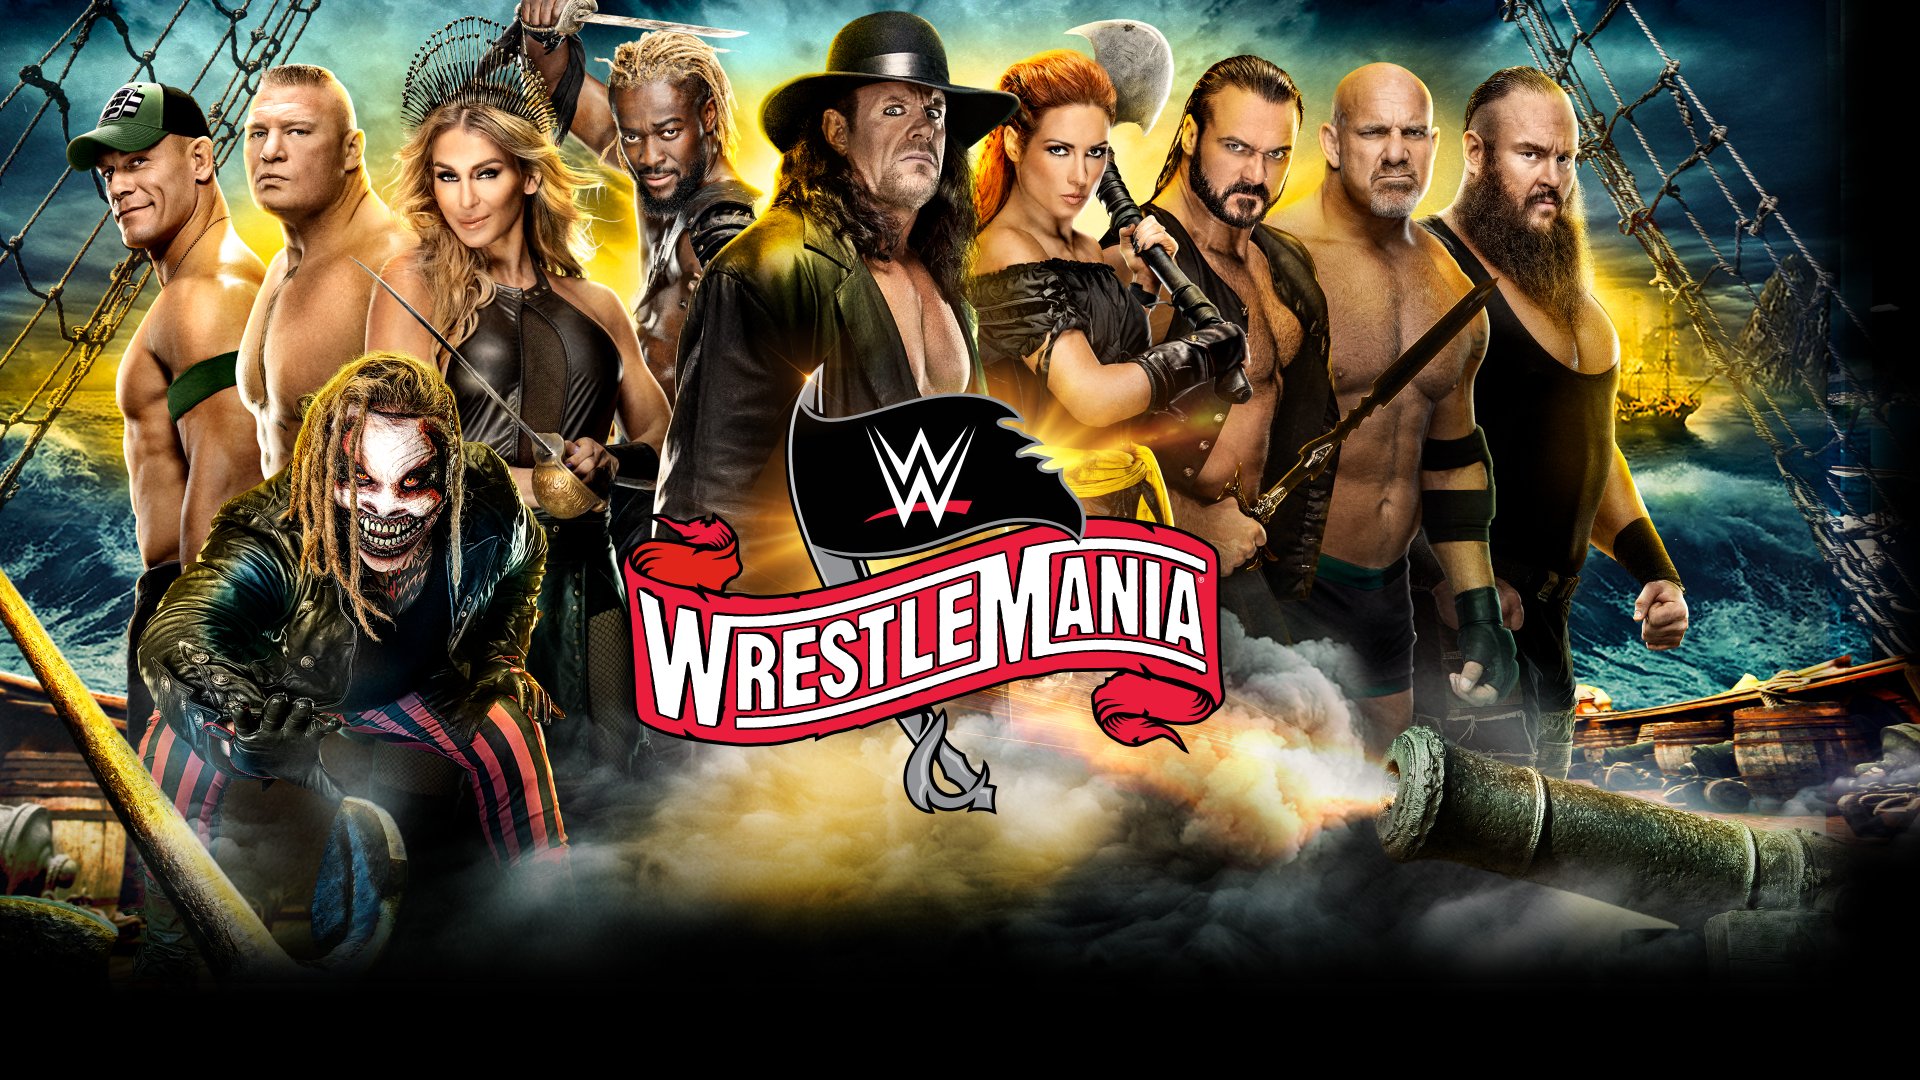 Wwe Wrestlemania 36 Night 1 Results Apr 4 Undertaker Vs Styles Tpww